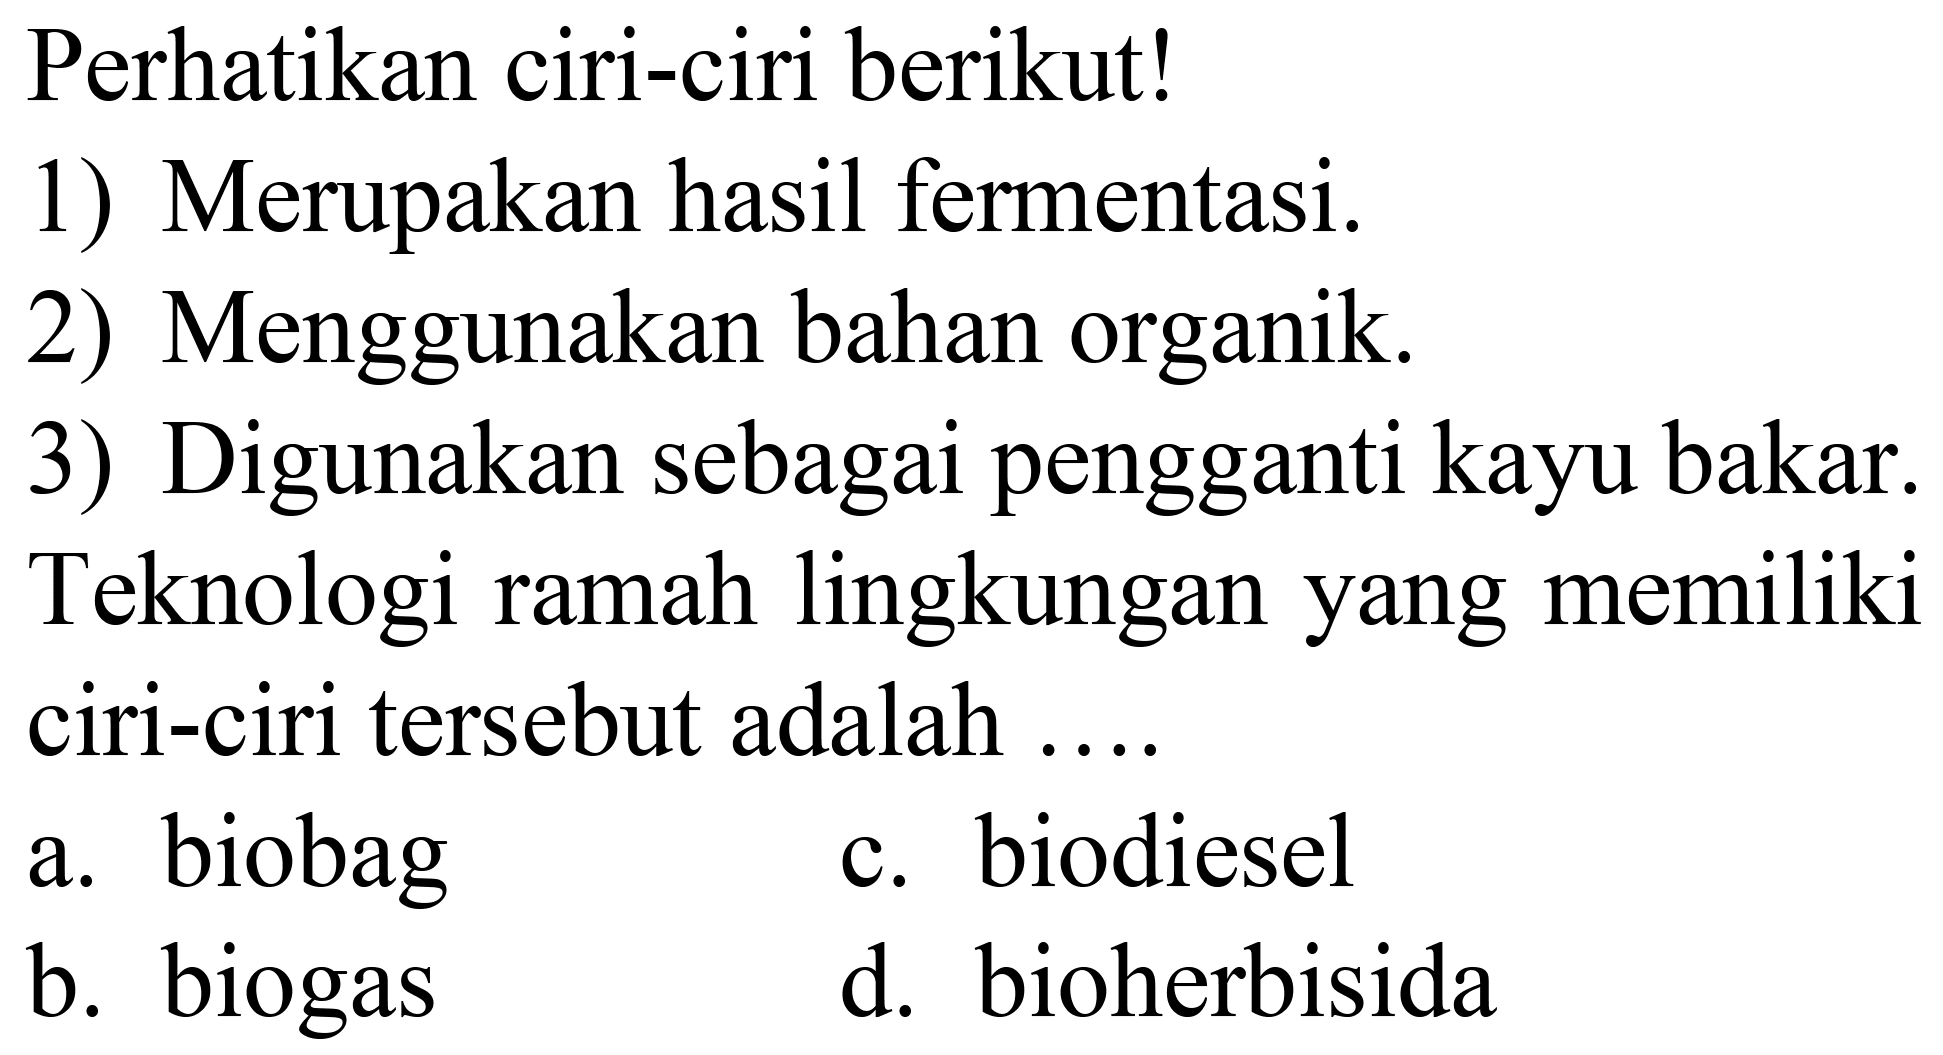 Perhatikan ciri-ciri berikut!
1) Merupakan hasil fermentasi.
2) Menggunakan bahan organik.
3) Digunakan sebagai pengganti kayu bakar.
Teknologi ramah lingkungan yang memiliki ciri-ciri tersebut adalah ....
a. biobag
c. biodiesel
b. biogas
d. bioherbisida